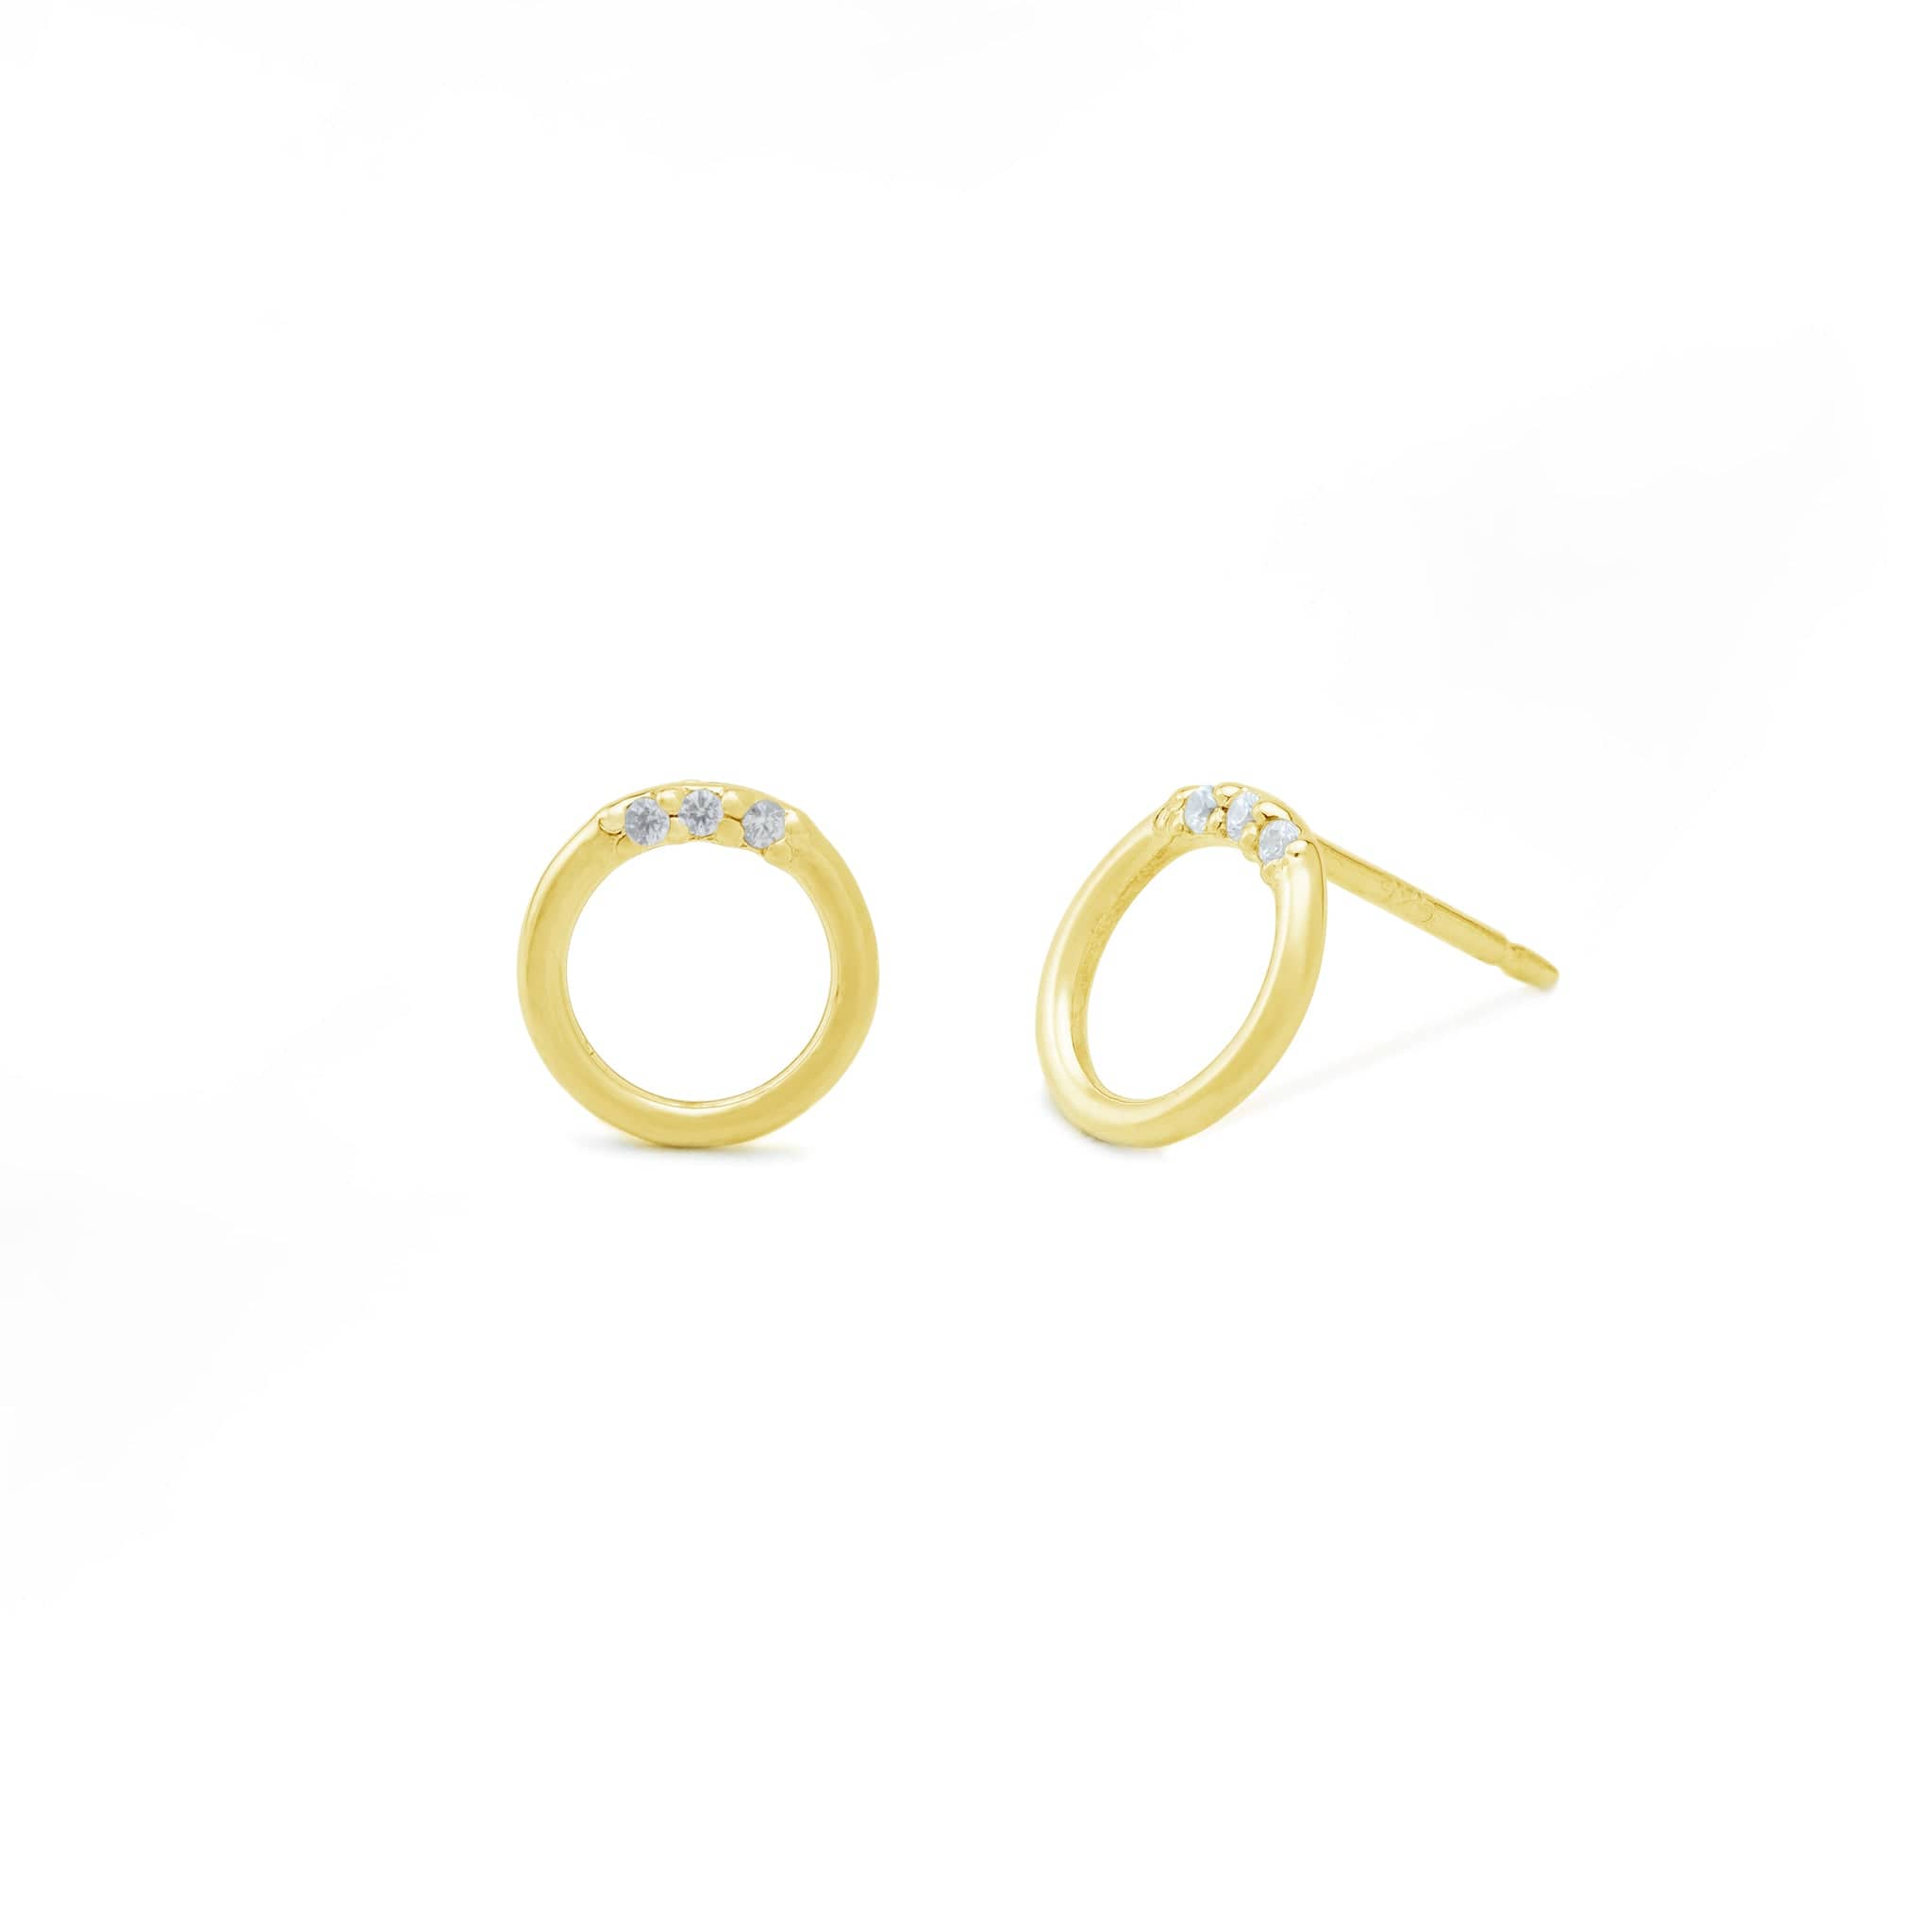 Boma Jewelry Earrings 14K Gold Vermeil Circle Mini CZ Studs